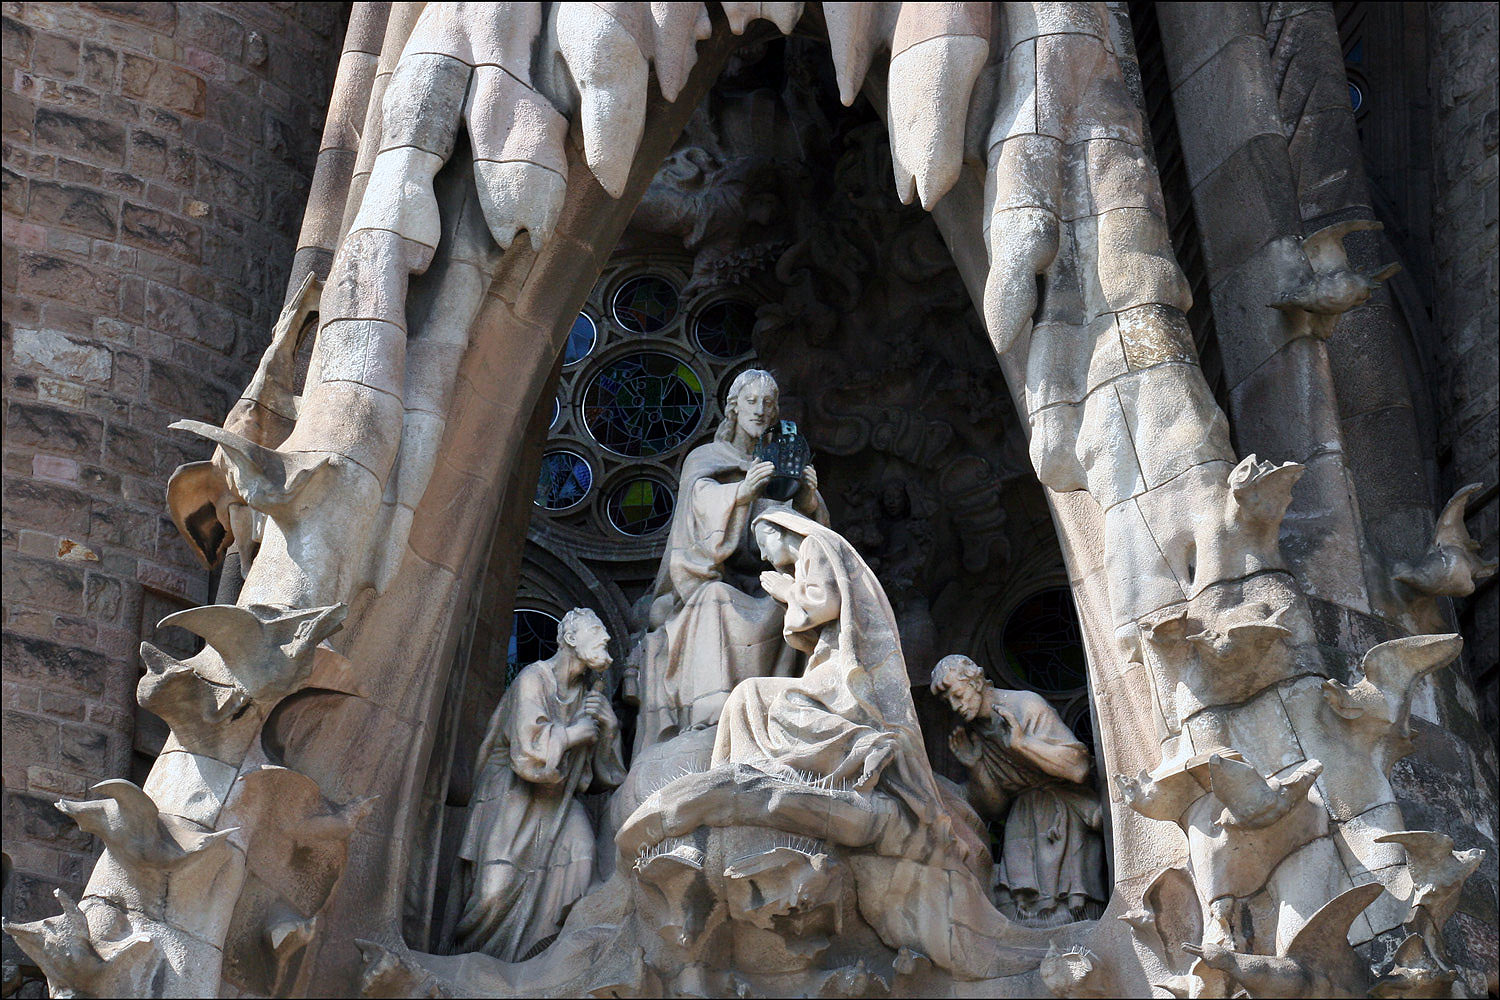 Sagrada Familia by Gaudi - Basilica in Barcelona, Spain - 137 Year Project 58